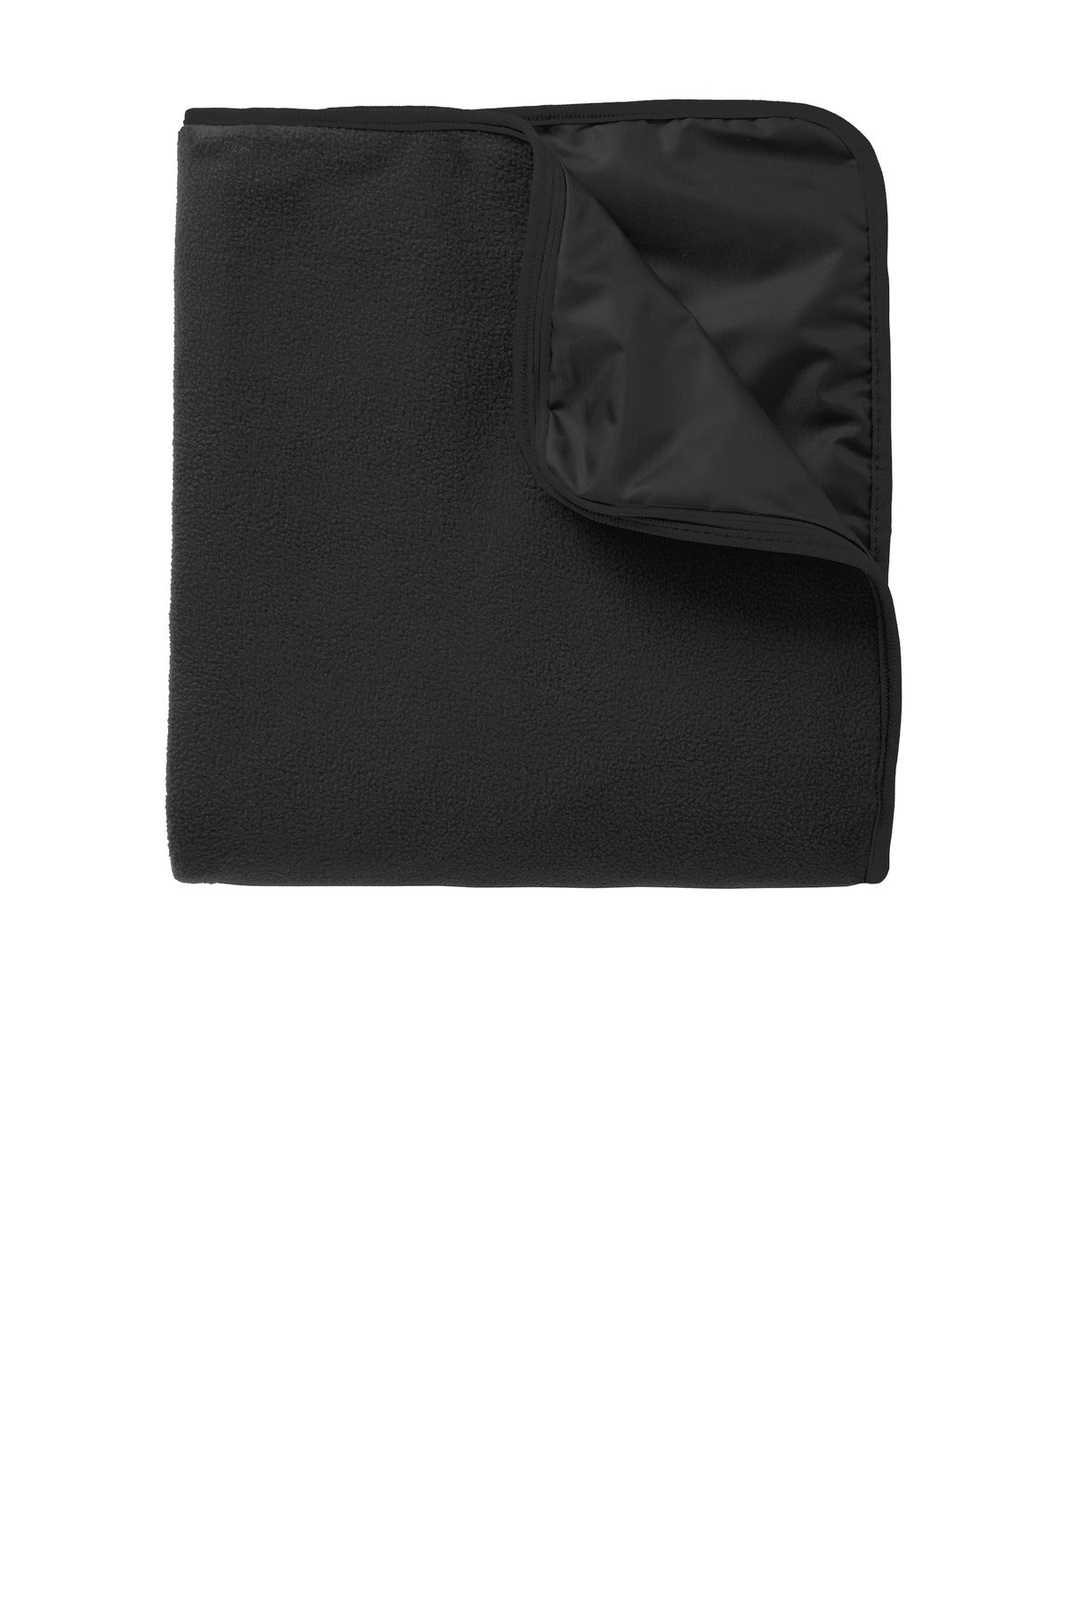 Port Authority TB850 Fleece & Poly Travel Blanket - Black Black - HIT a Double - 1